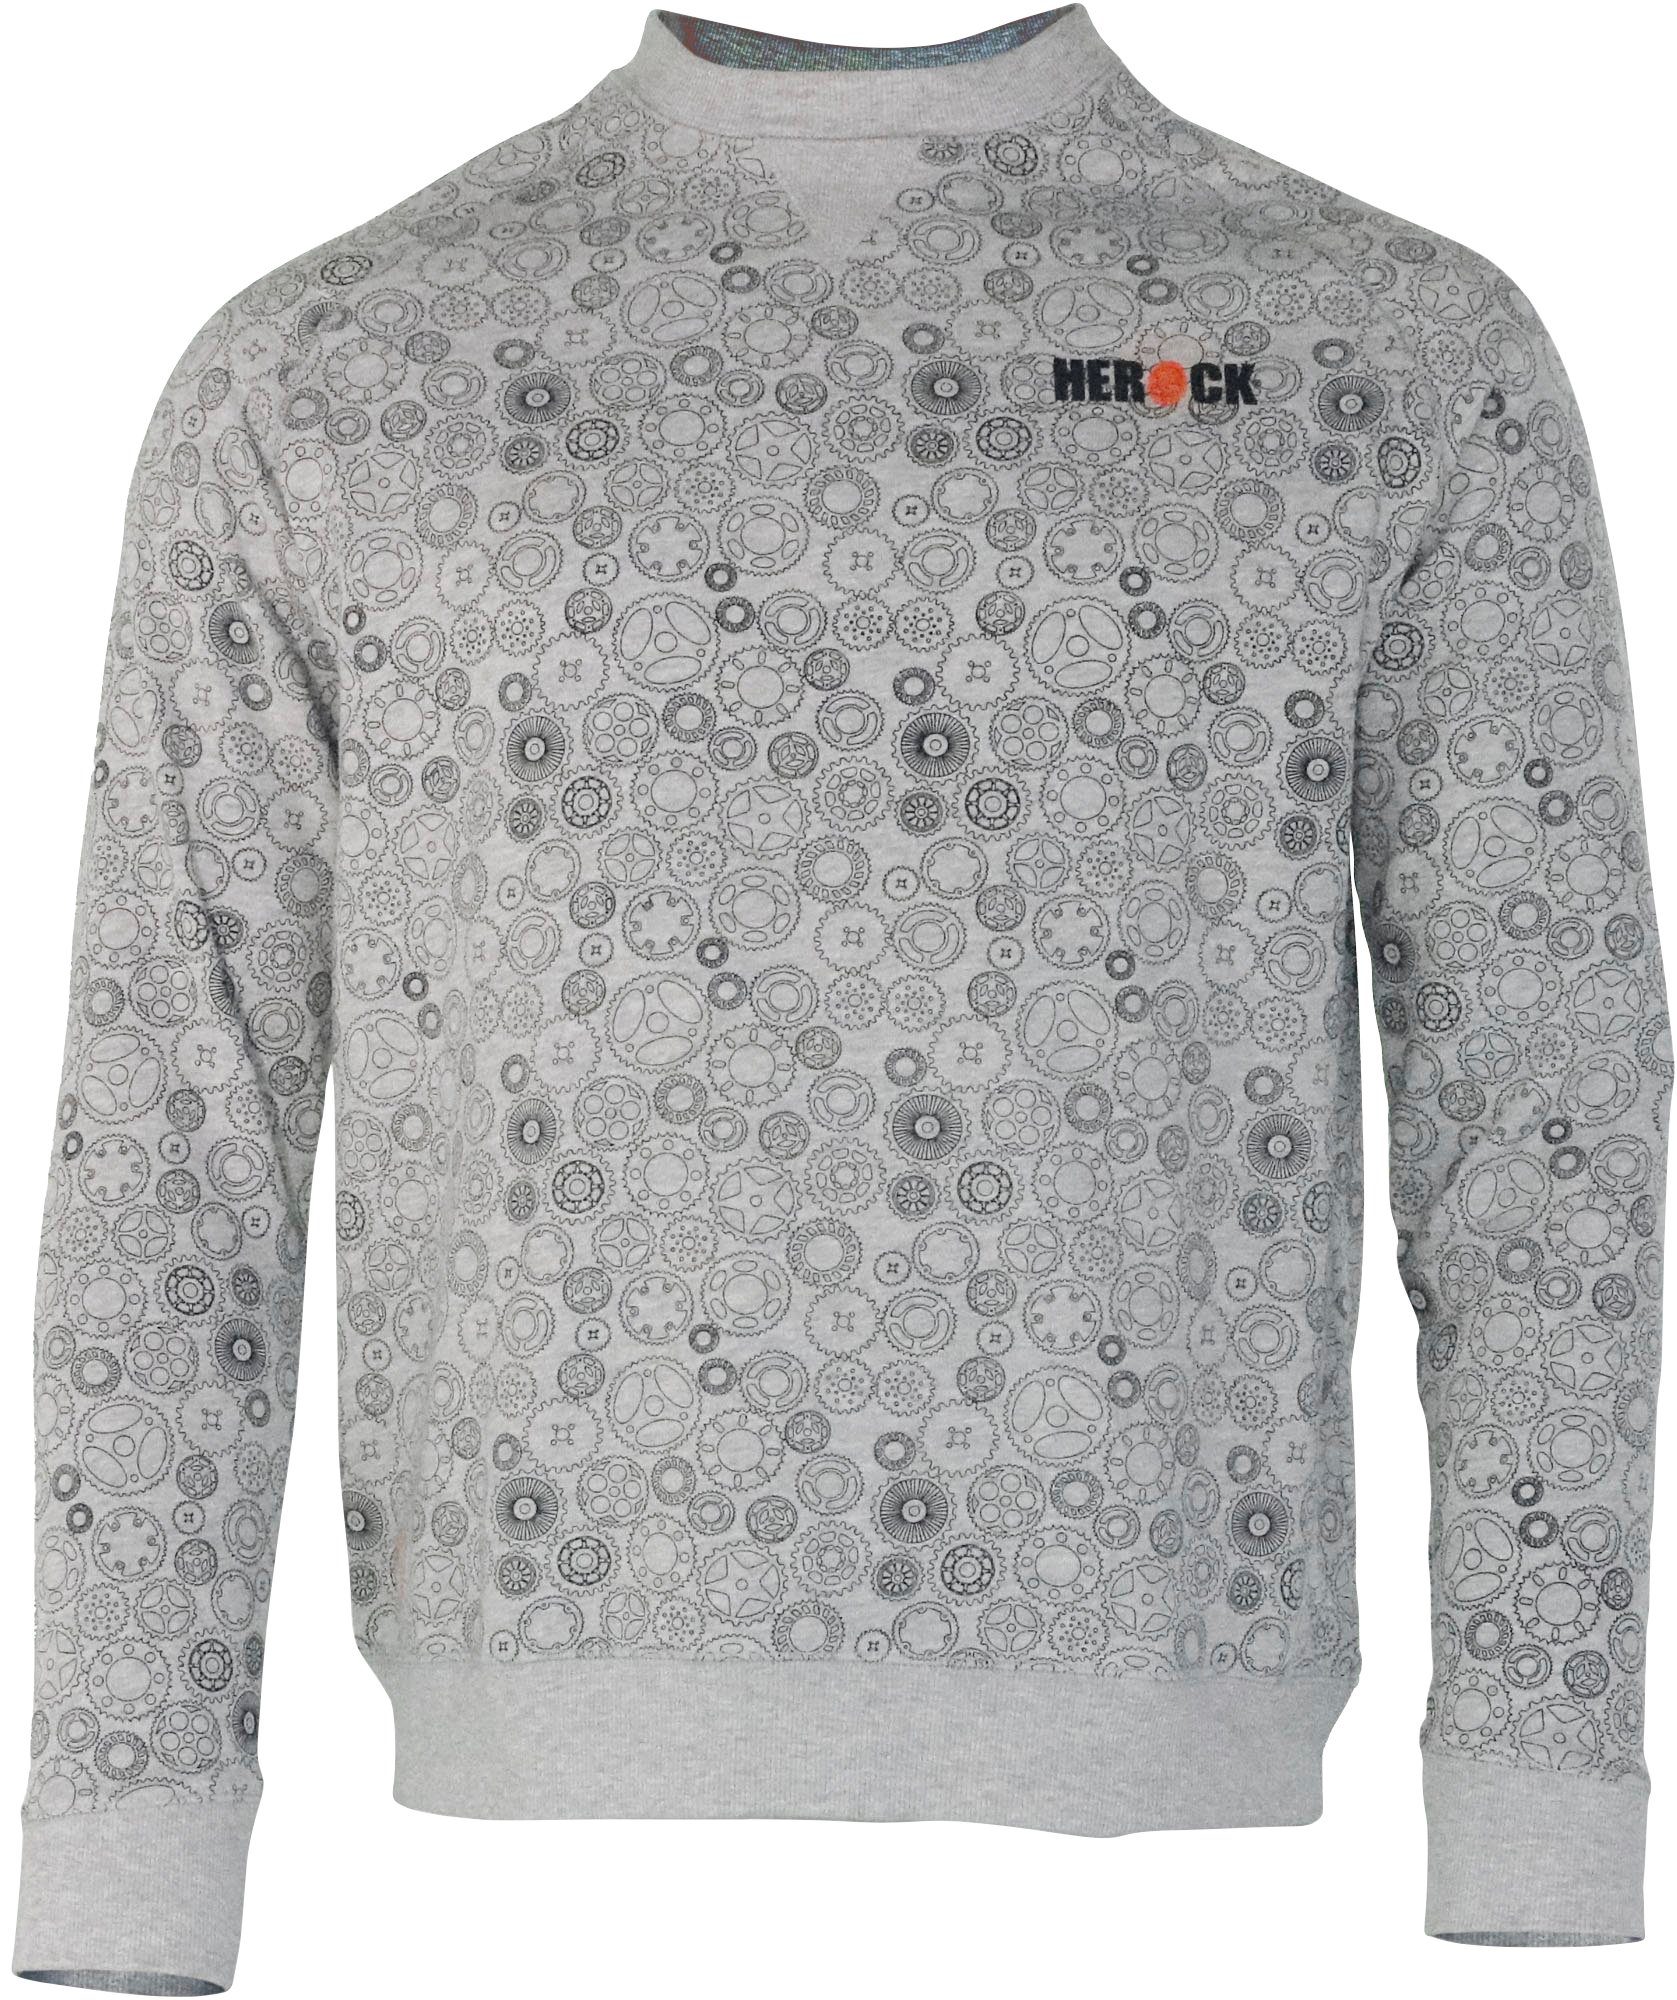 Mit & angenehmes Zahnrad-Muster Engineer Tragegefühl Sweater Herock®-Aufdruck, Herock